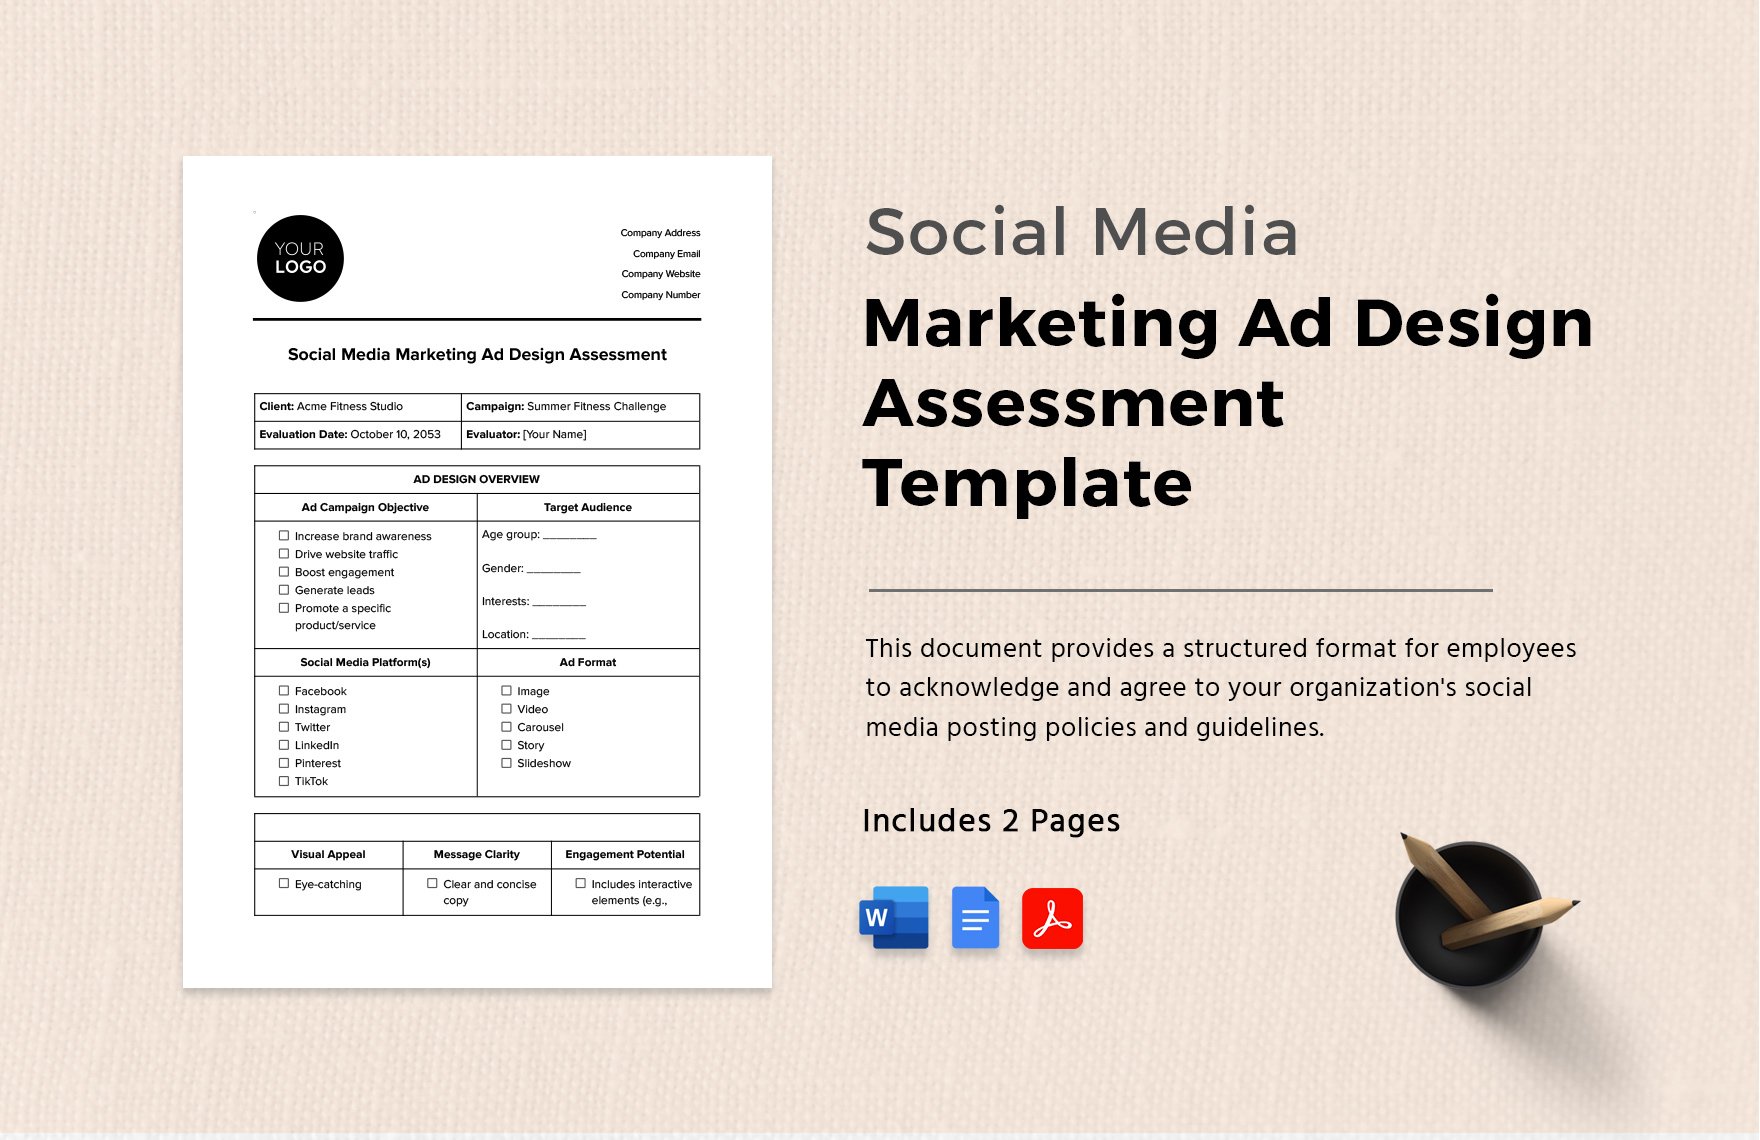 Social Media Marketing Ad Design Assessment Template